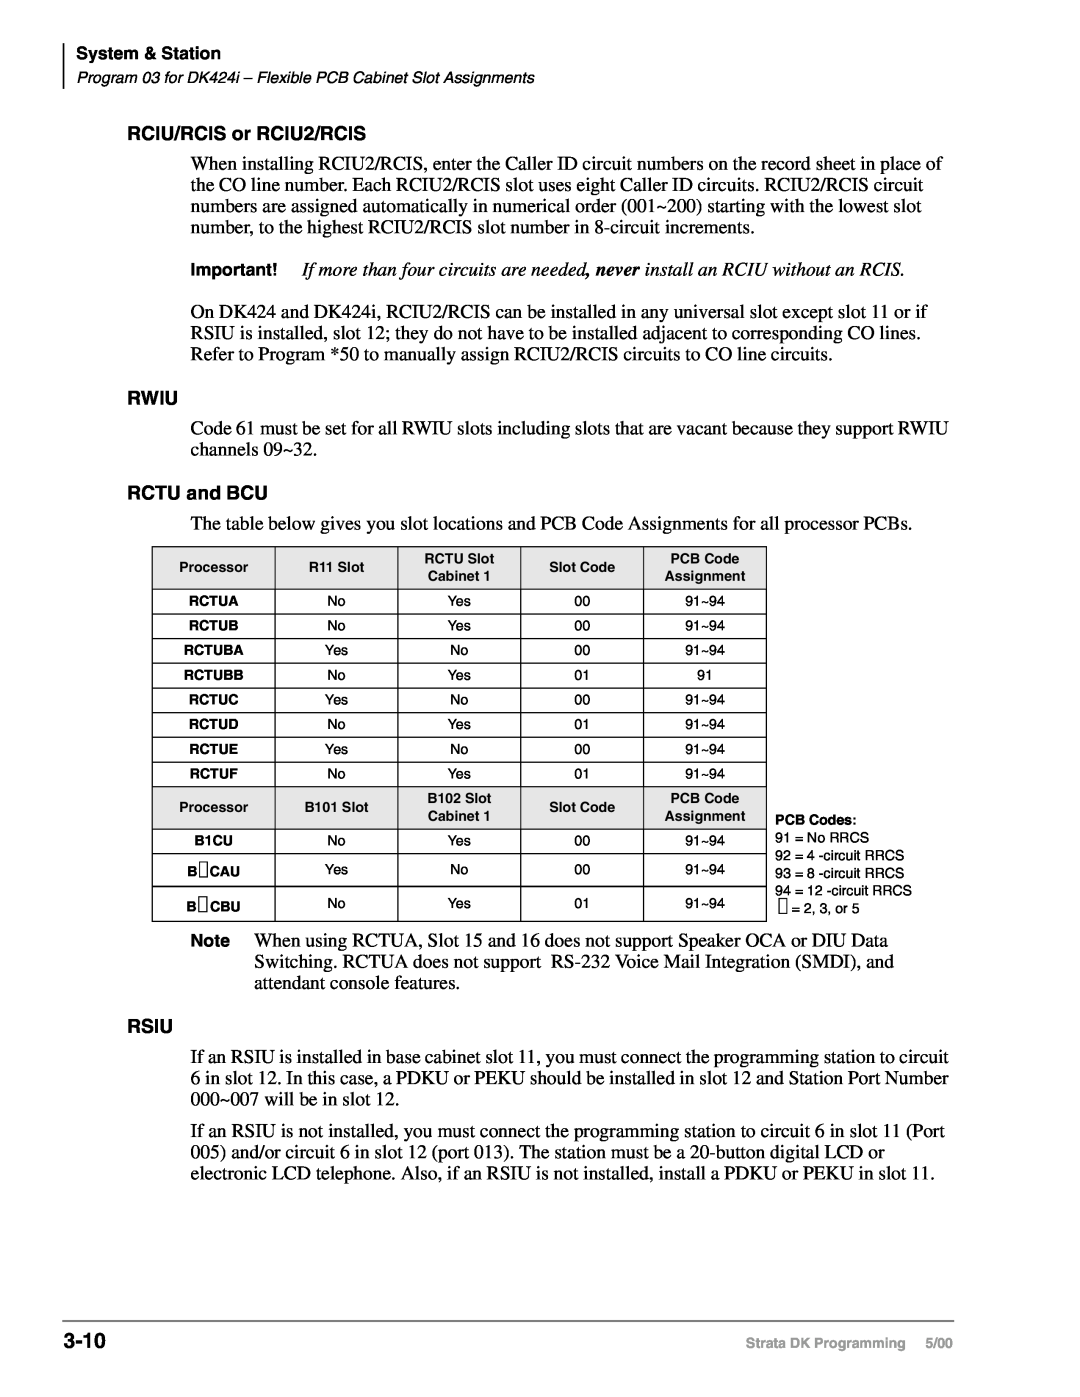 Toshiba DK40I, dk14, DK424I manual 3-10, RCIU/RCIS or RCIU2/RCIS, Rwiu, RCTU and BCU, Rsiu 